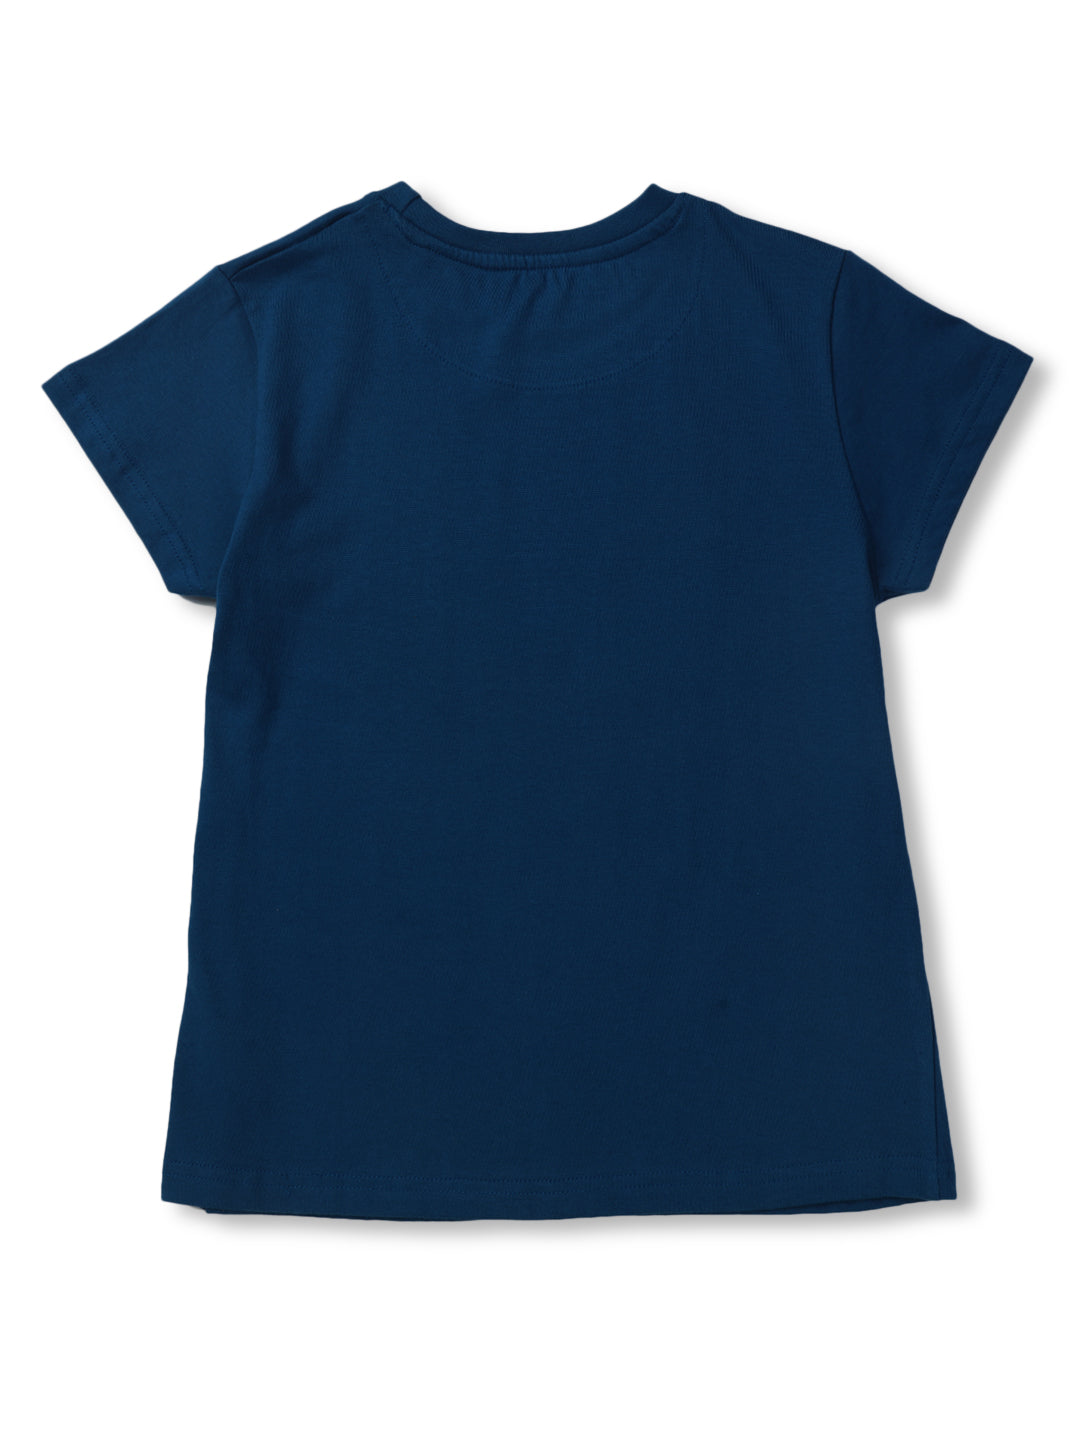 Girls Navy Blue Printed Cotton Knits Top